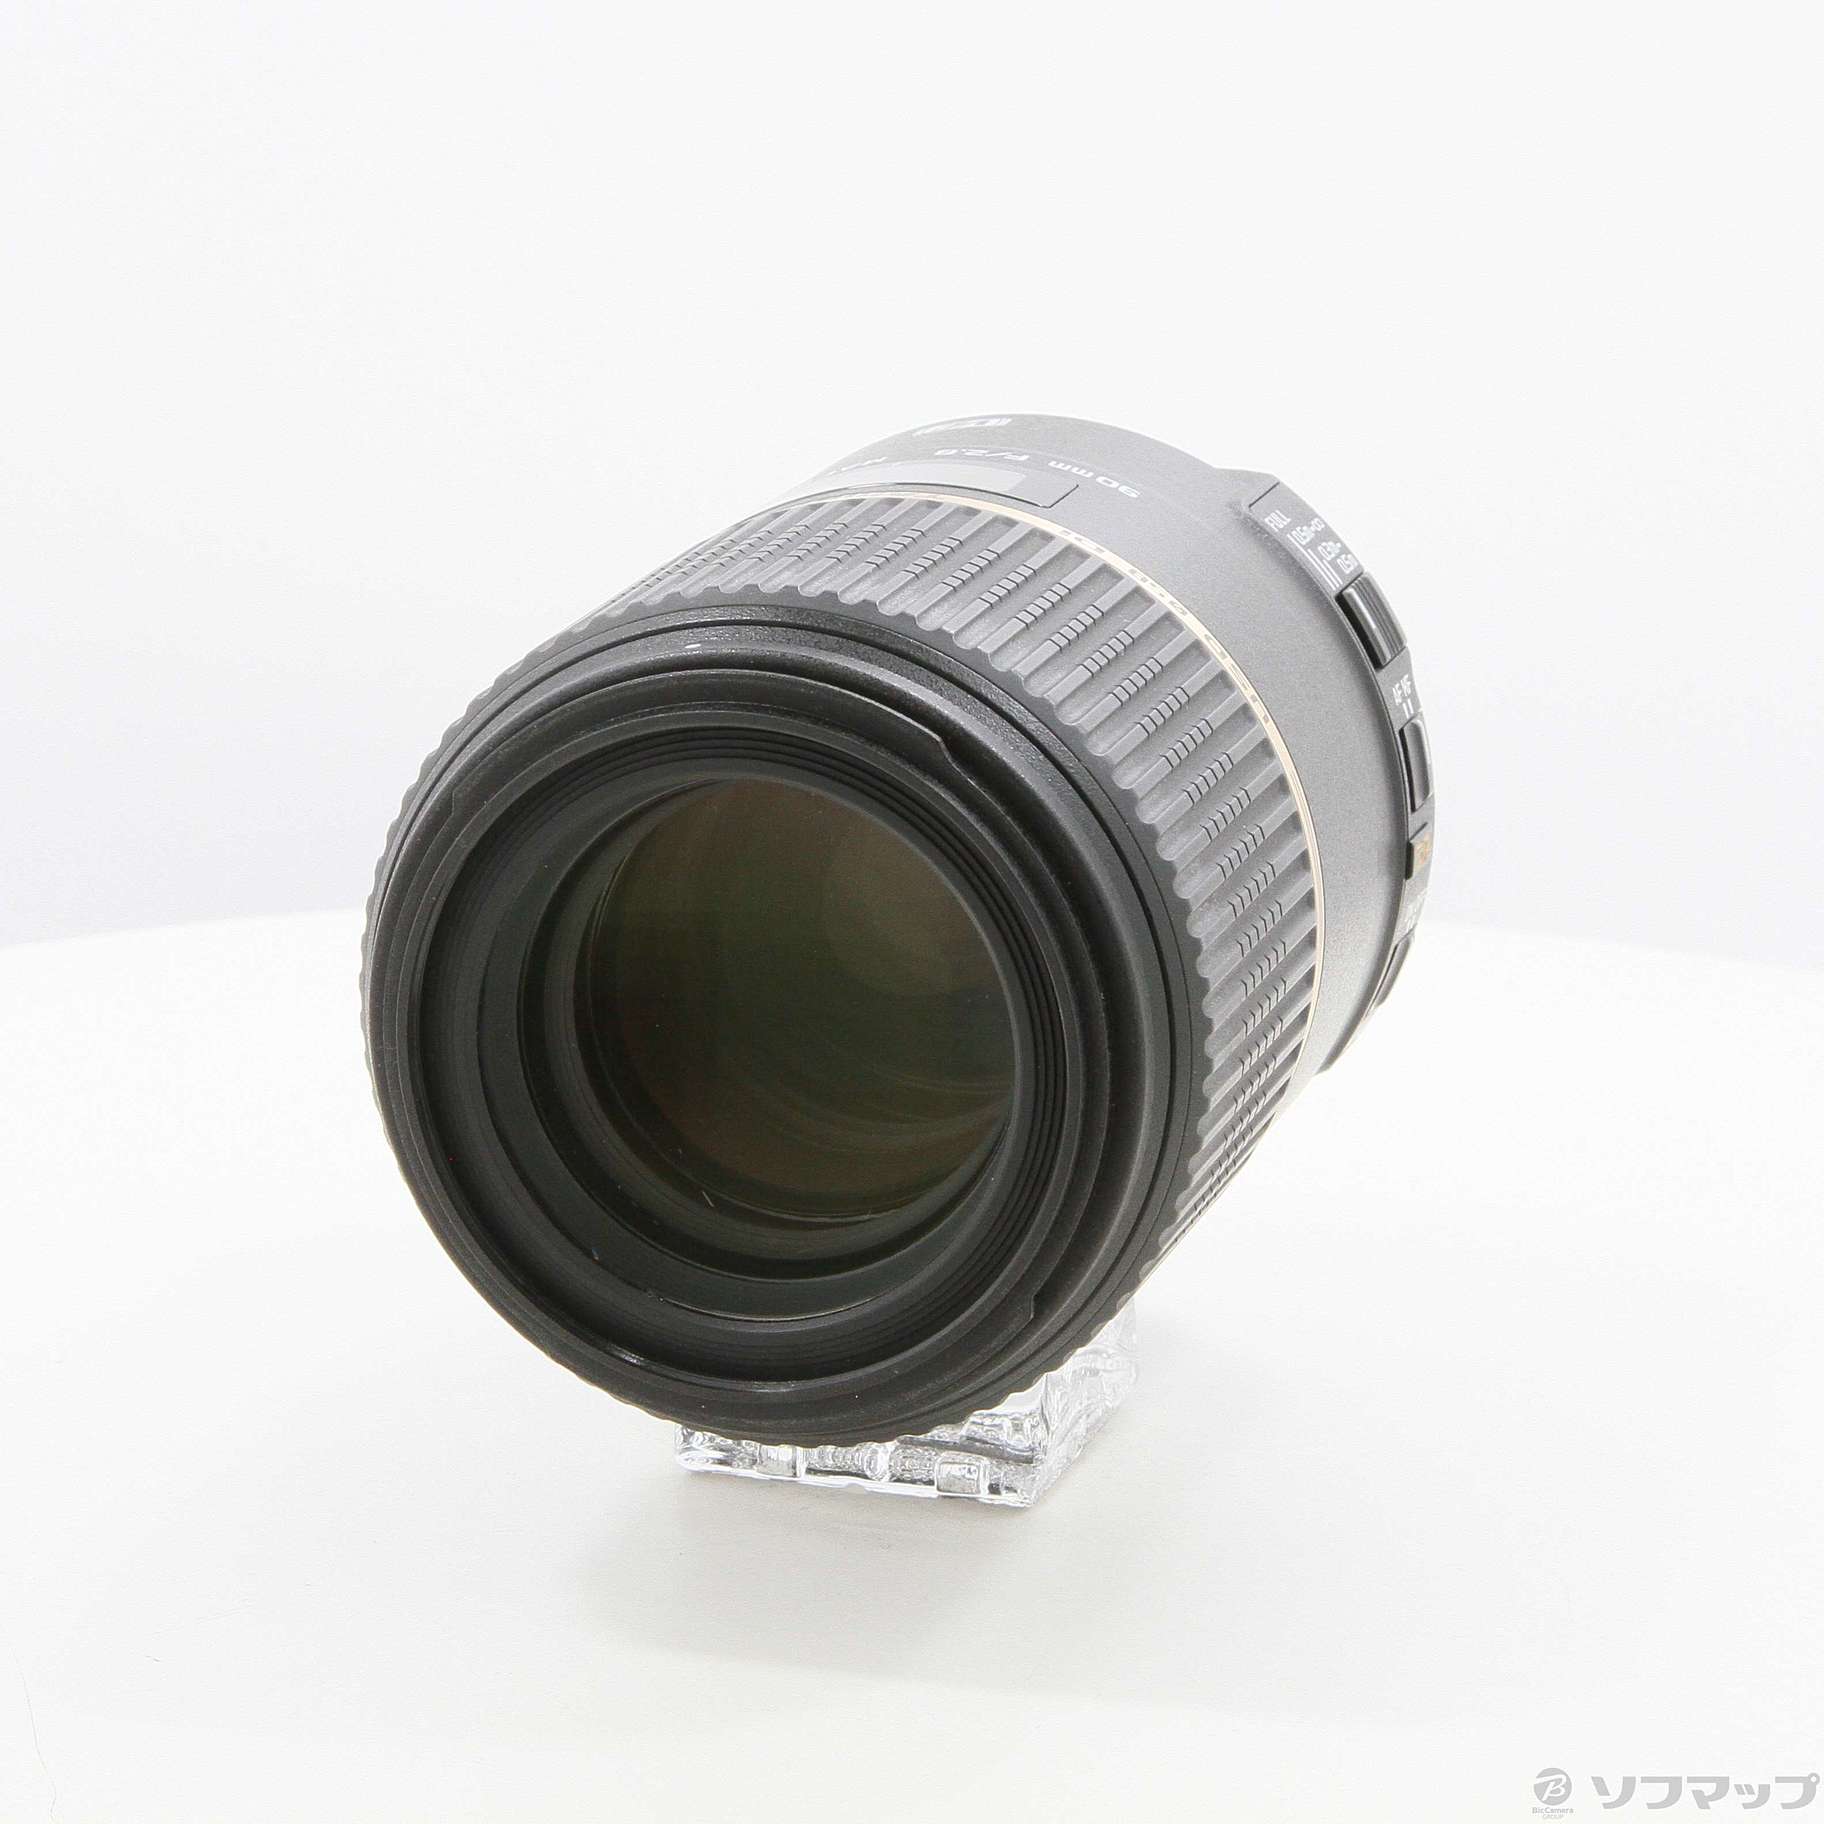 中古】SP AF 90mm F2.8 Di MACRO 1:1 VC USD (F004N) (Nikon用